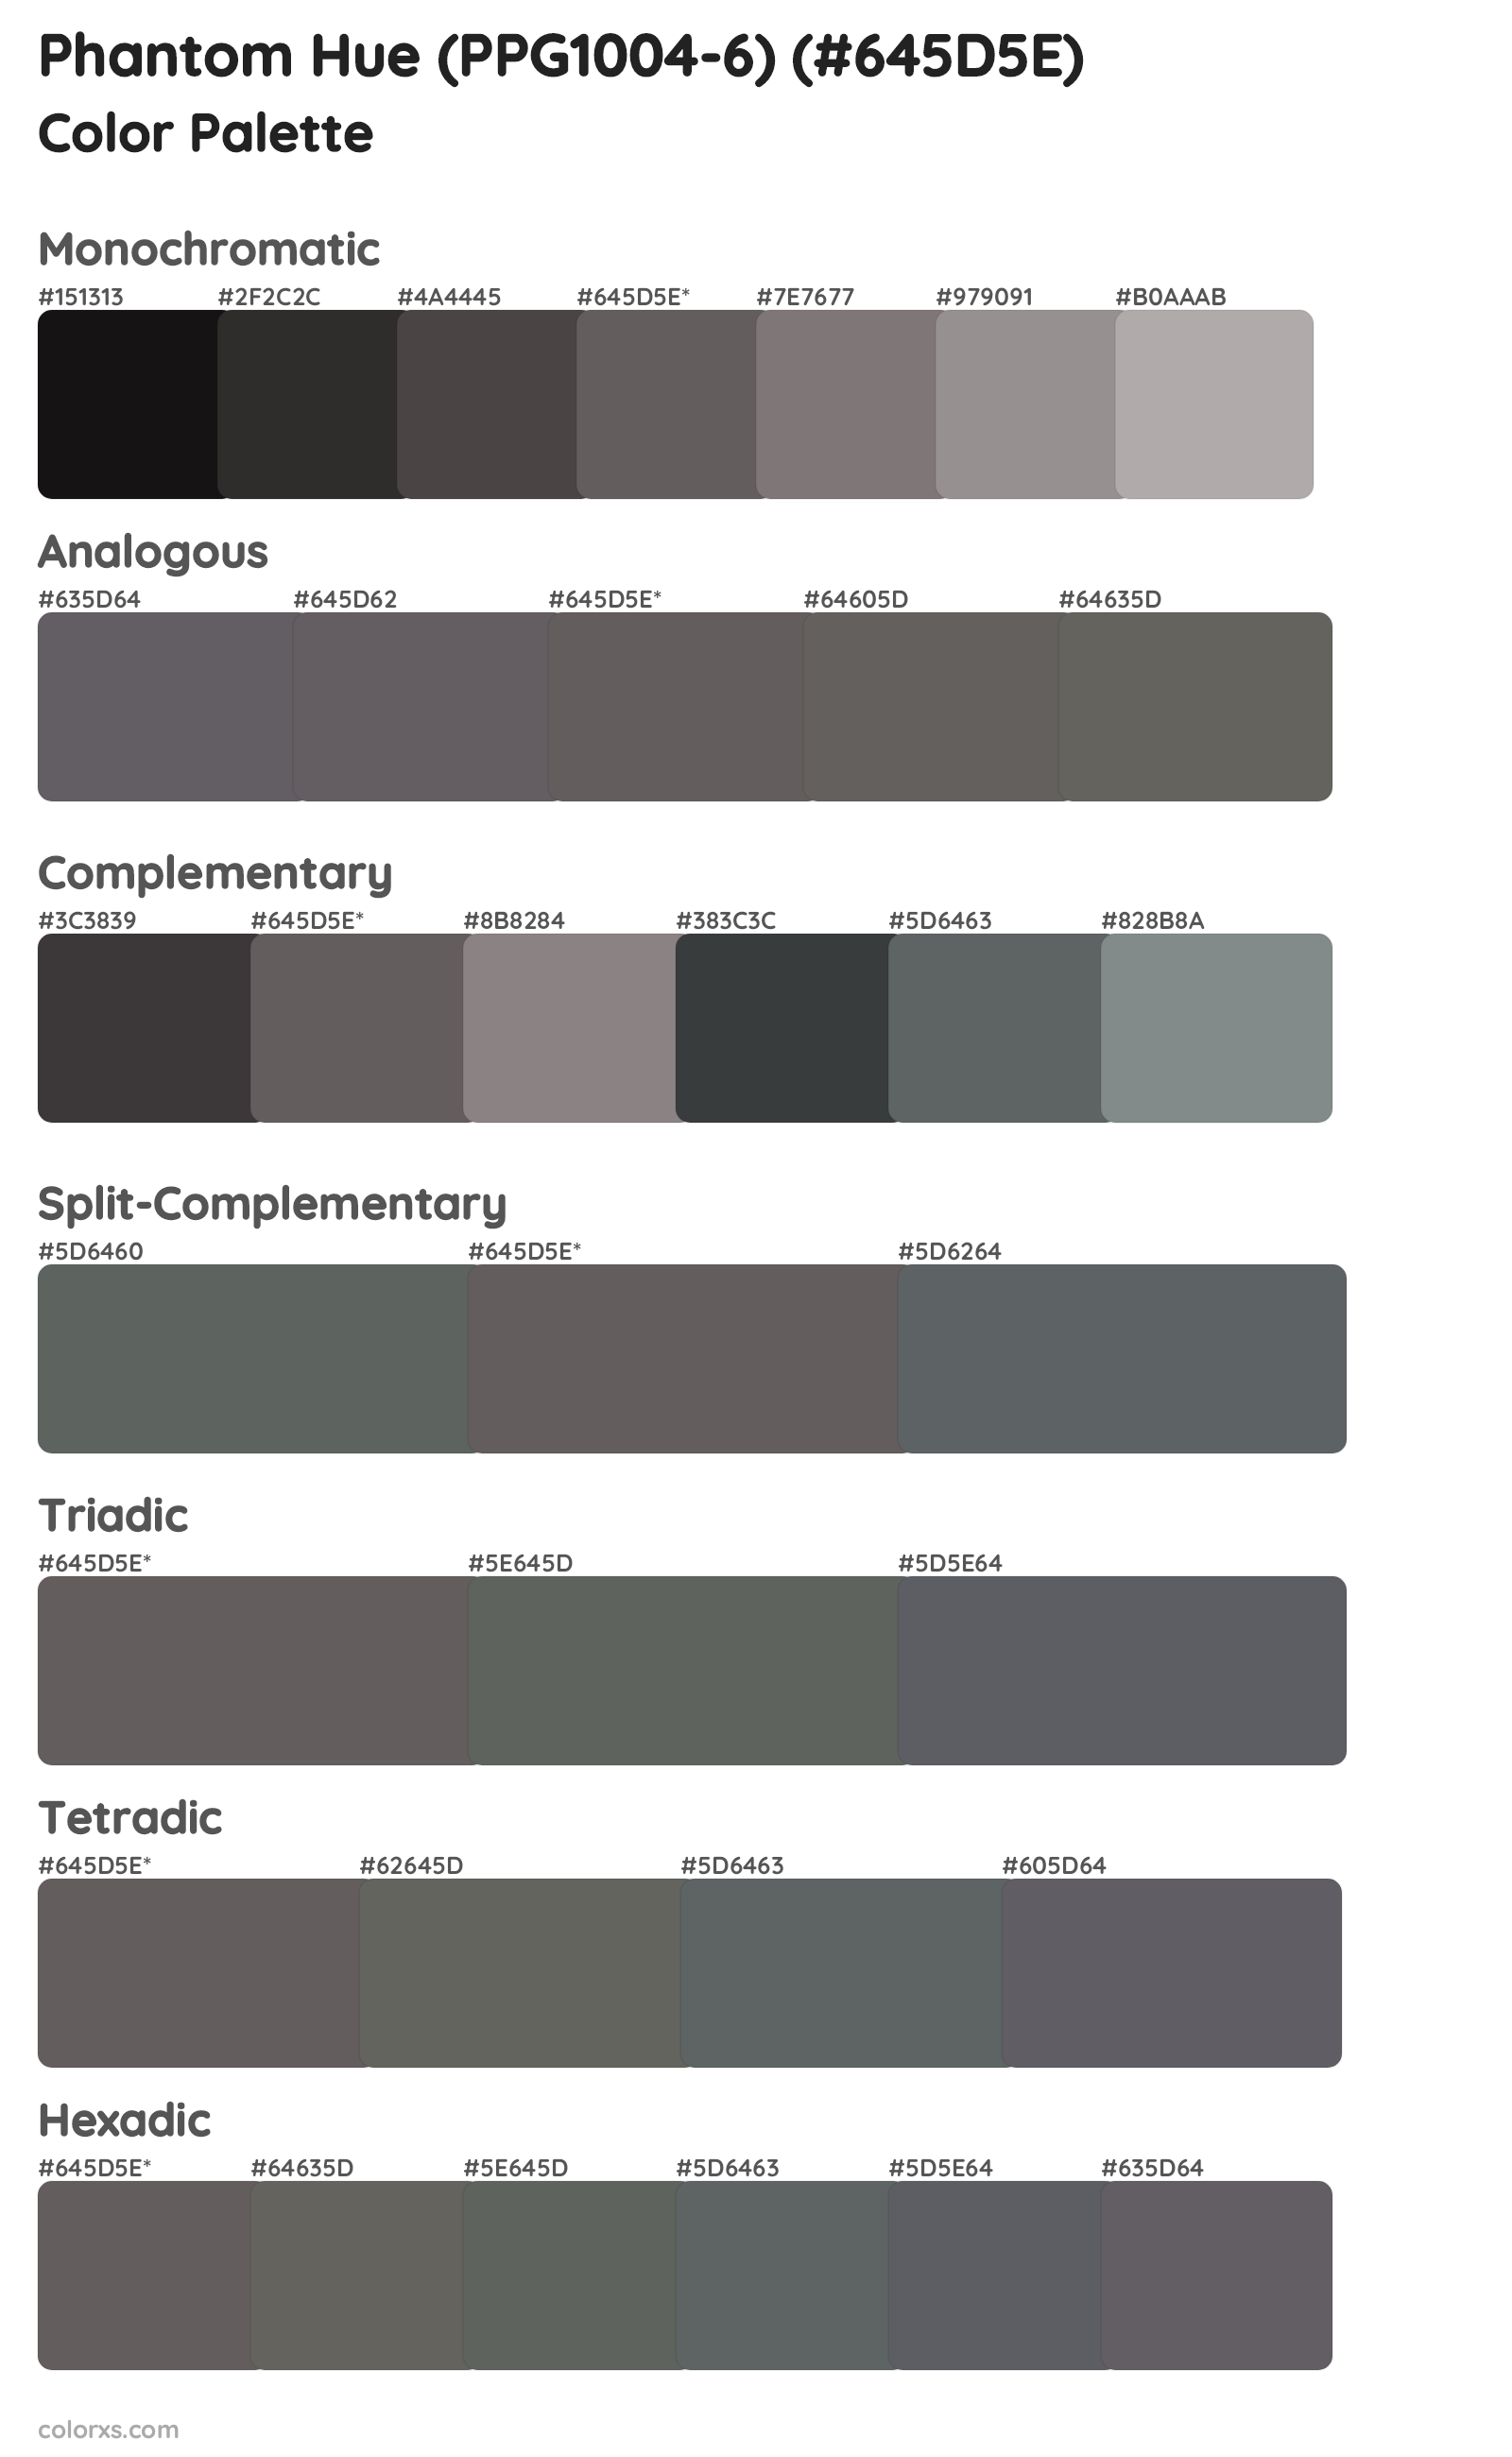 Phantom Hue (PPG1004-6) Color Scheme Palettes